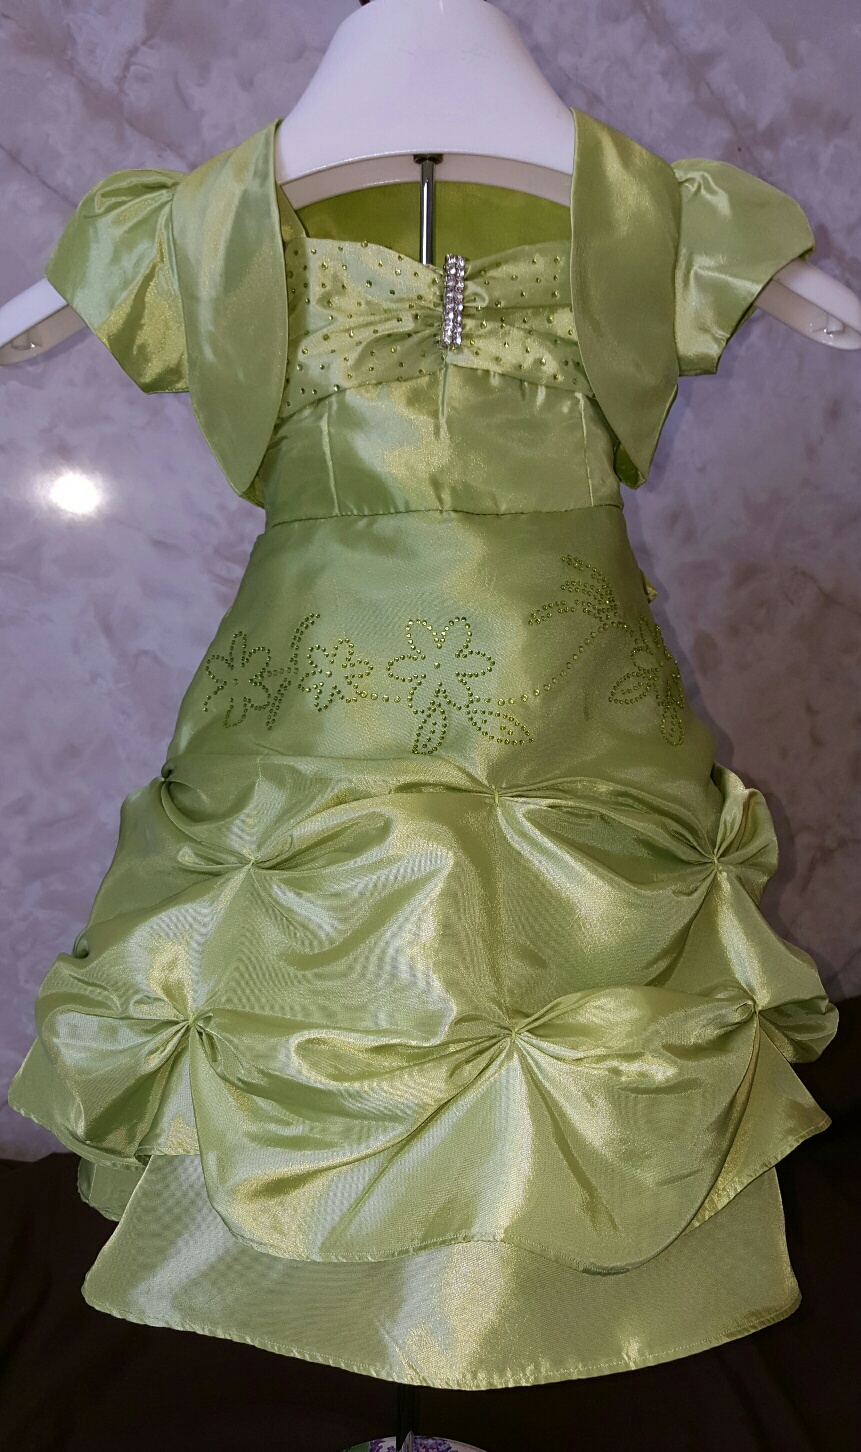 Lime green infant Easter dress sale.